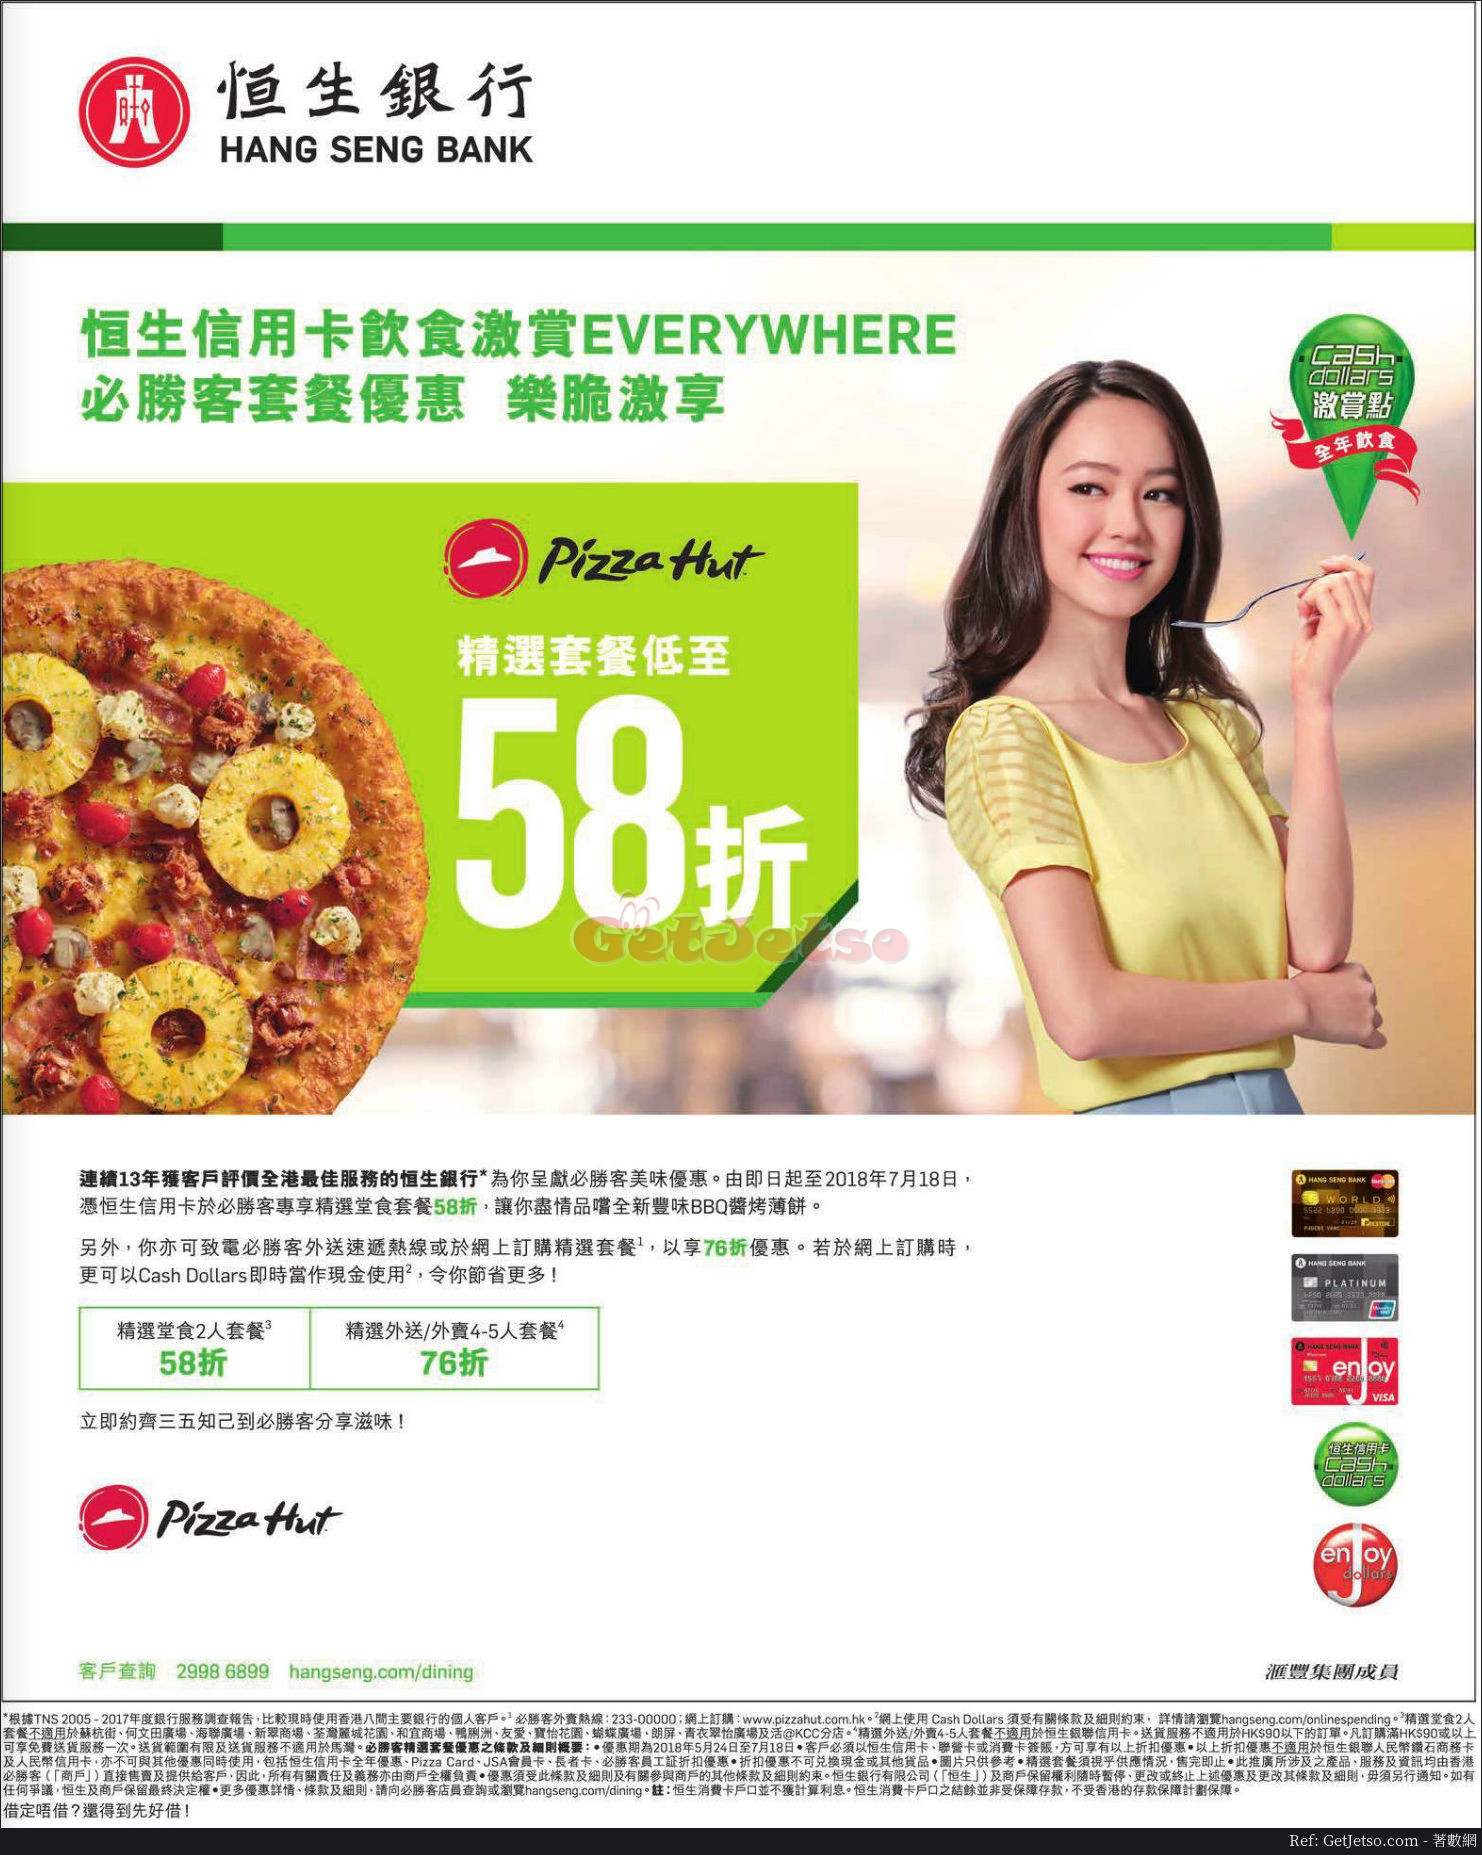 PizzaHut 低至58折飲食優惠@恒生信用卡(至18年7月18日)圖片1